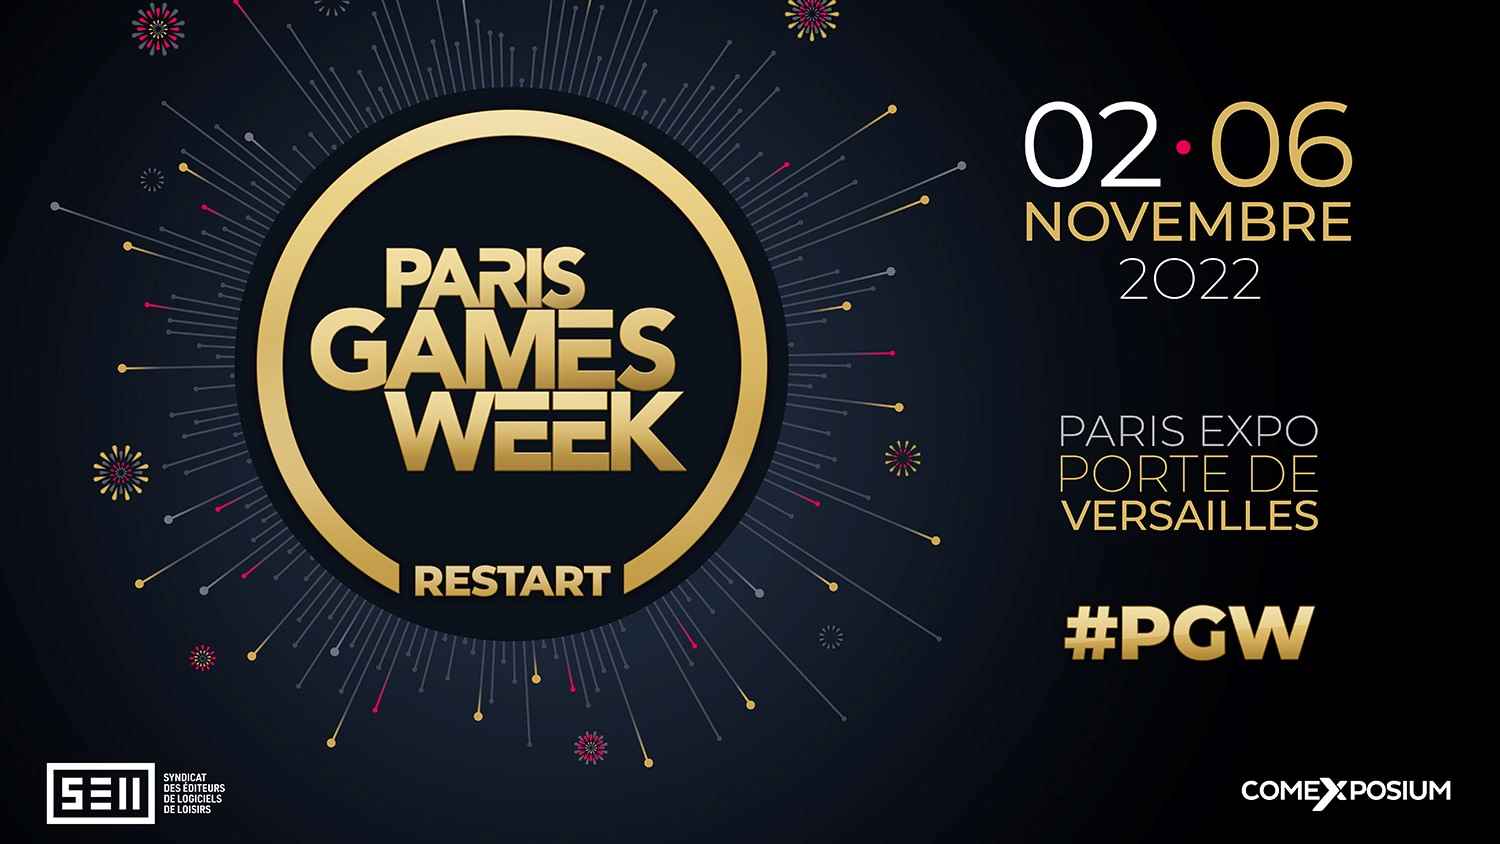 L'équipe Vitality tiendra un stand à la Paris Games Week RESTART.